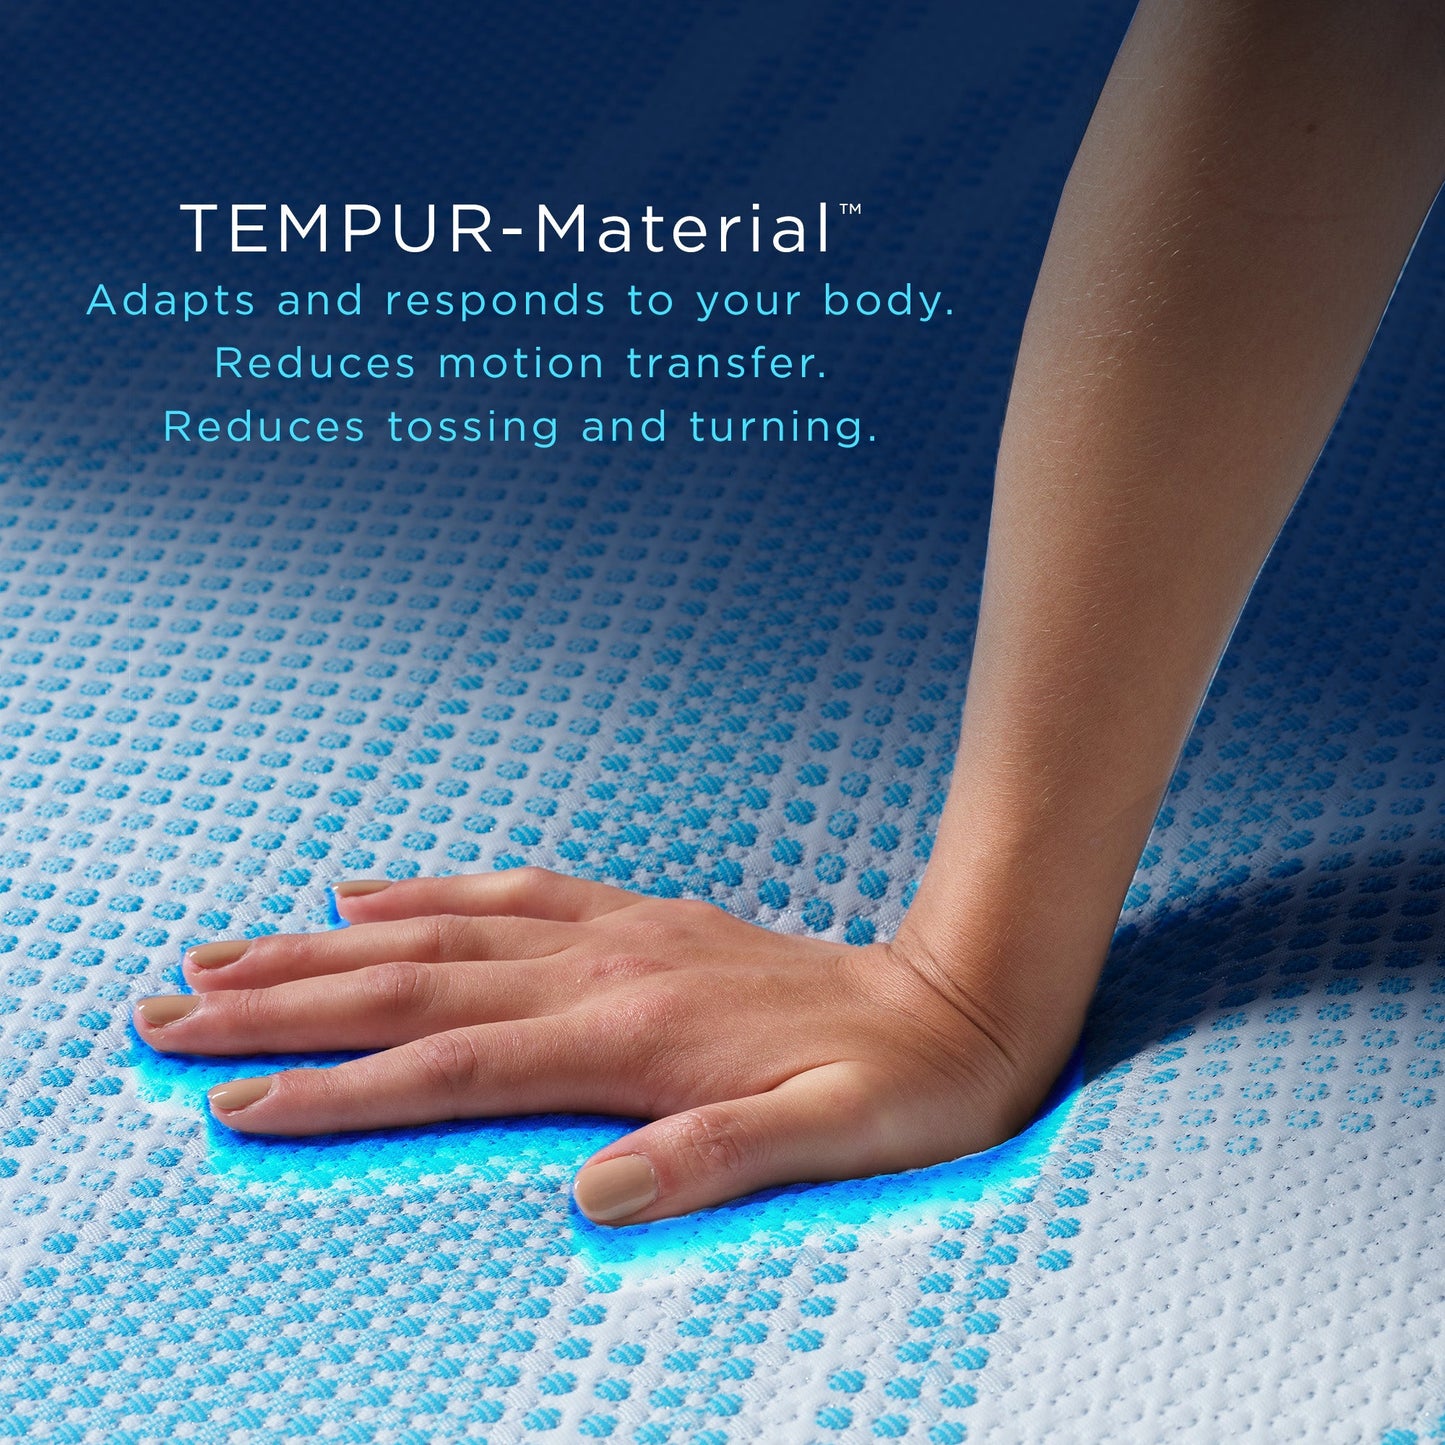 Tempur-Pedic Tempur-ProBreeze 2.0 Medium Mattress reduces tossing and turning